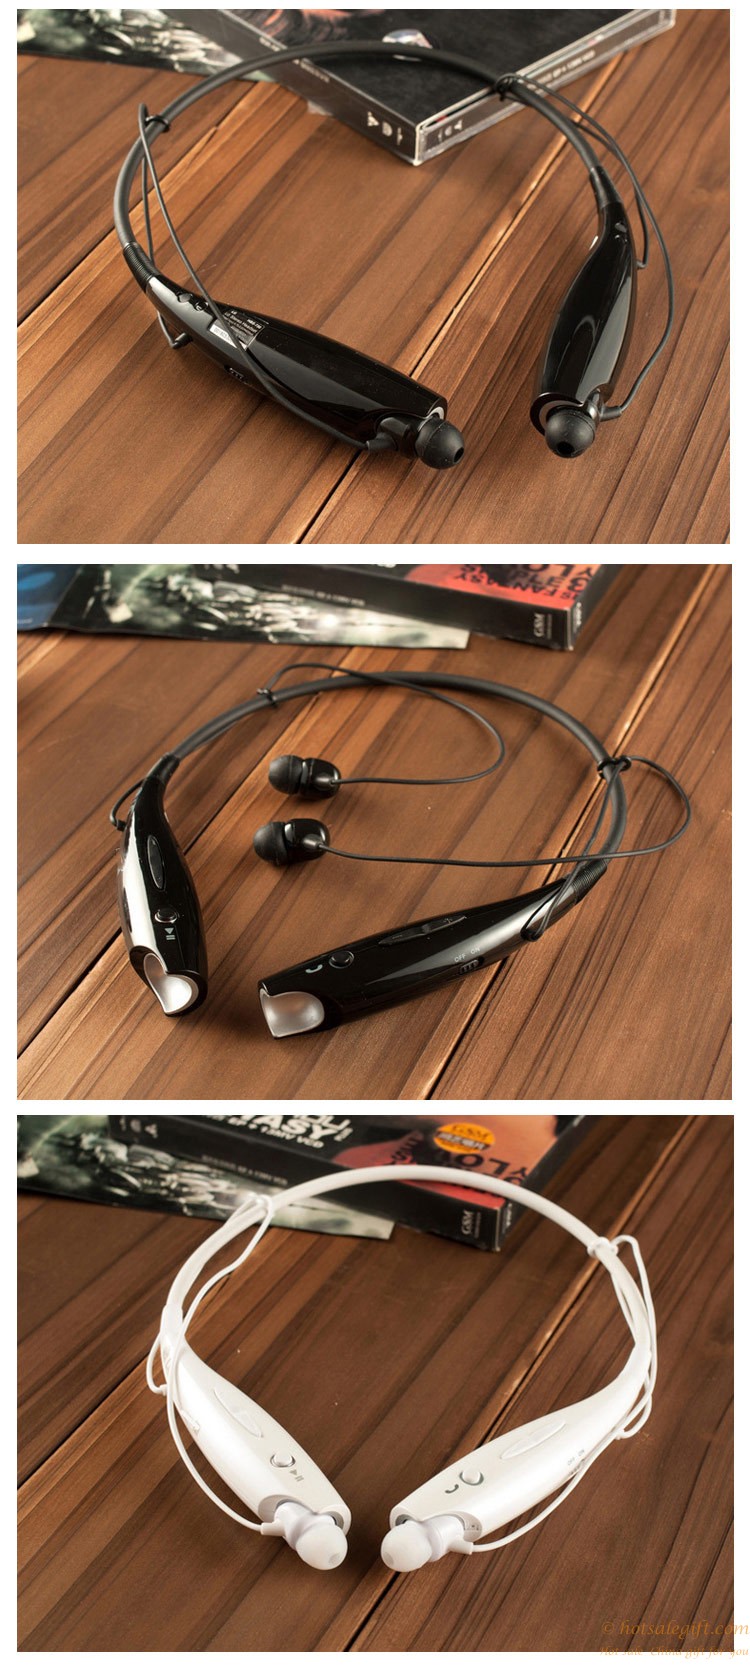 hotsalegift electronics tone bluetooth headphone headset hbs730 1